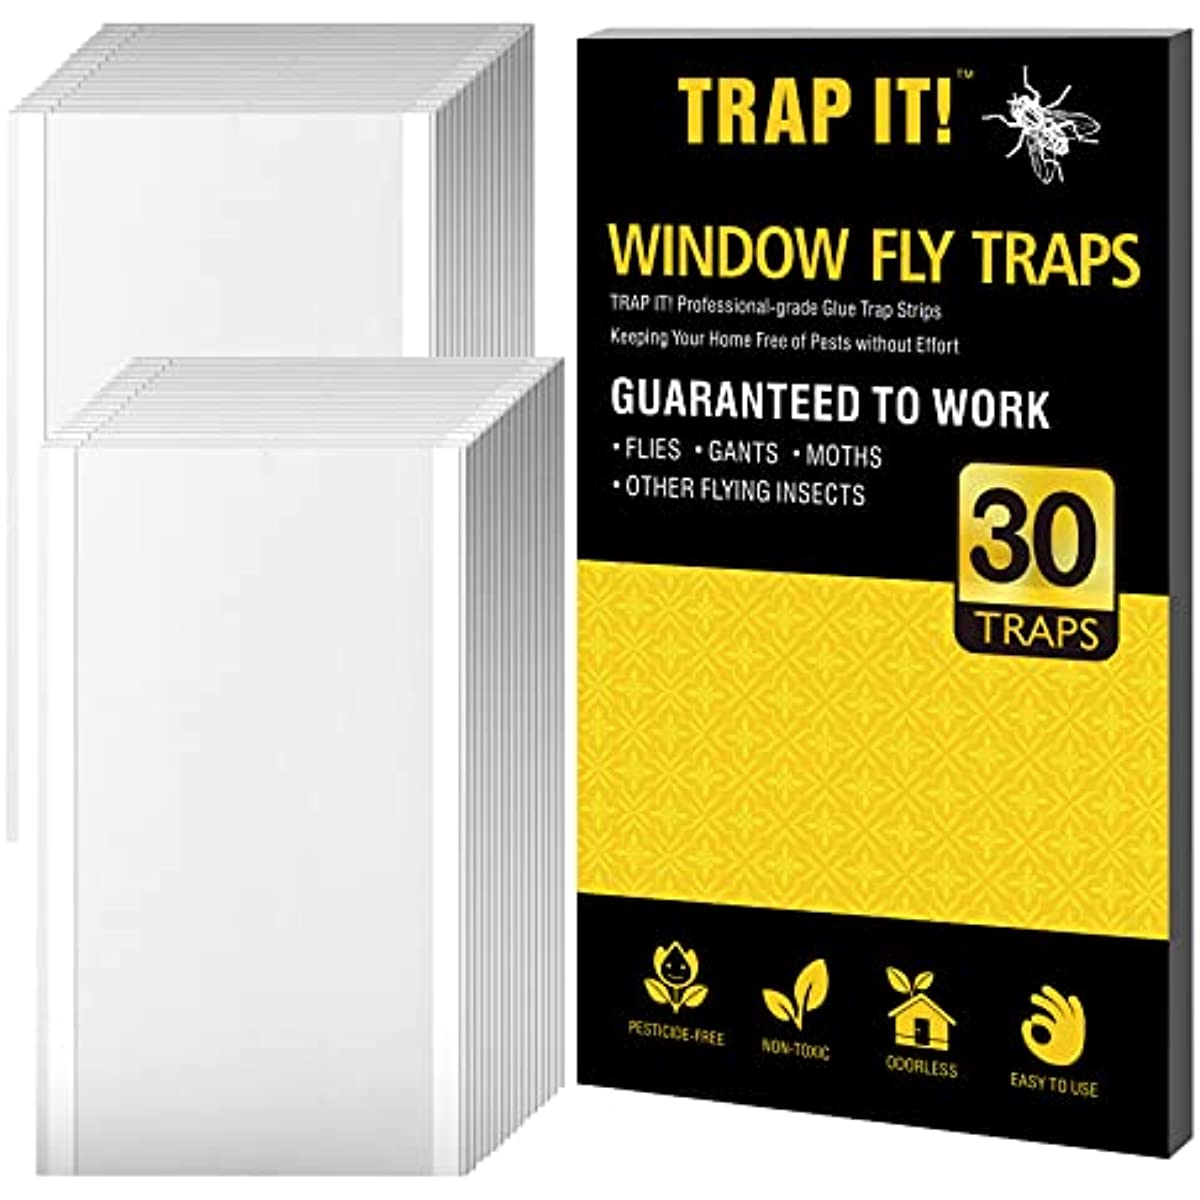 Stick-A-Fly Window Fly Trap